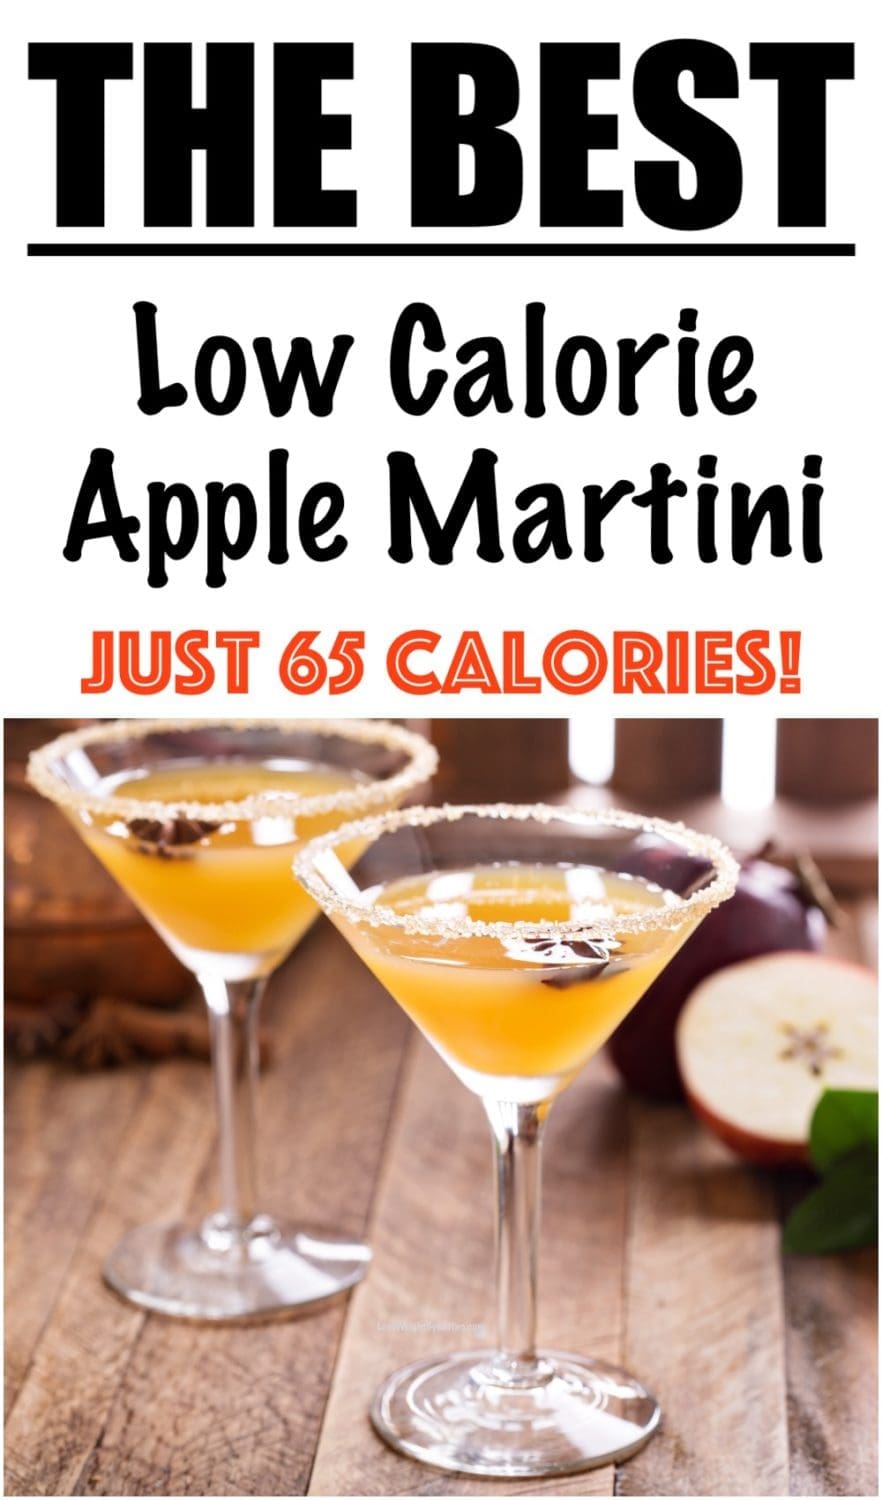 Apple Martini Drink 